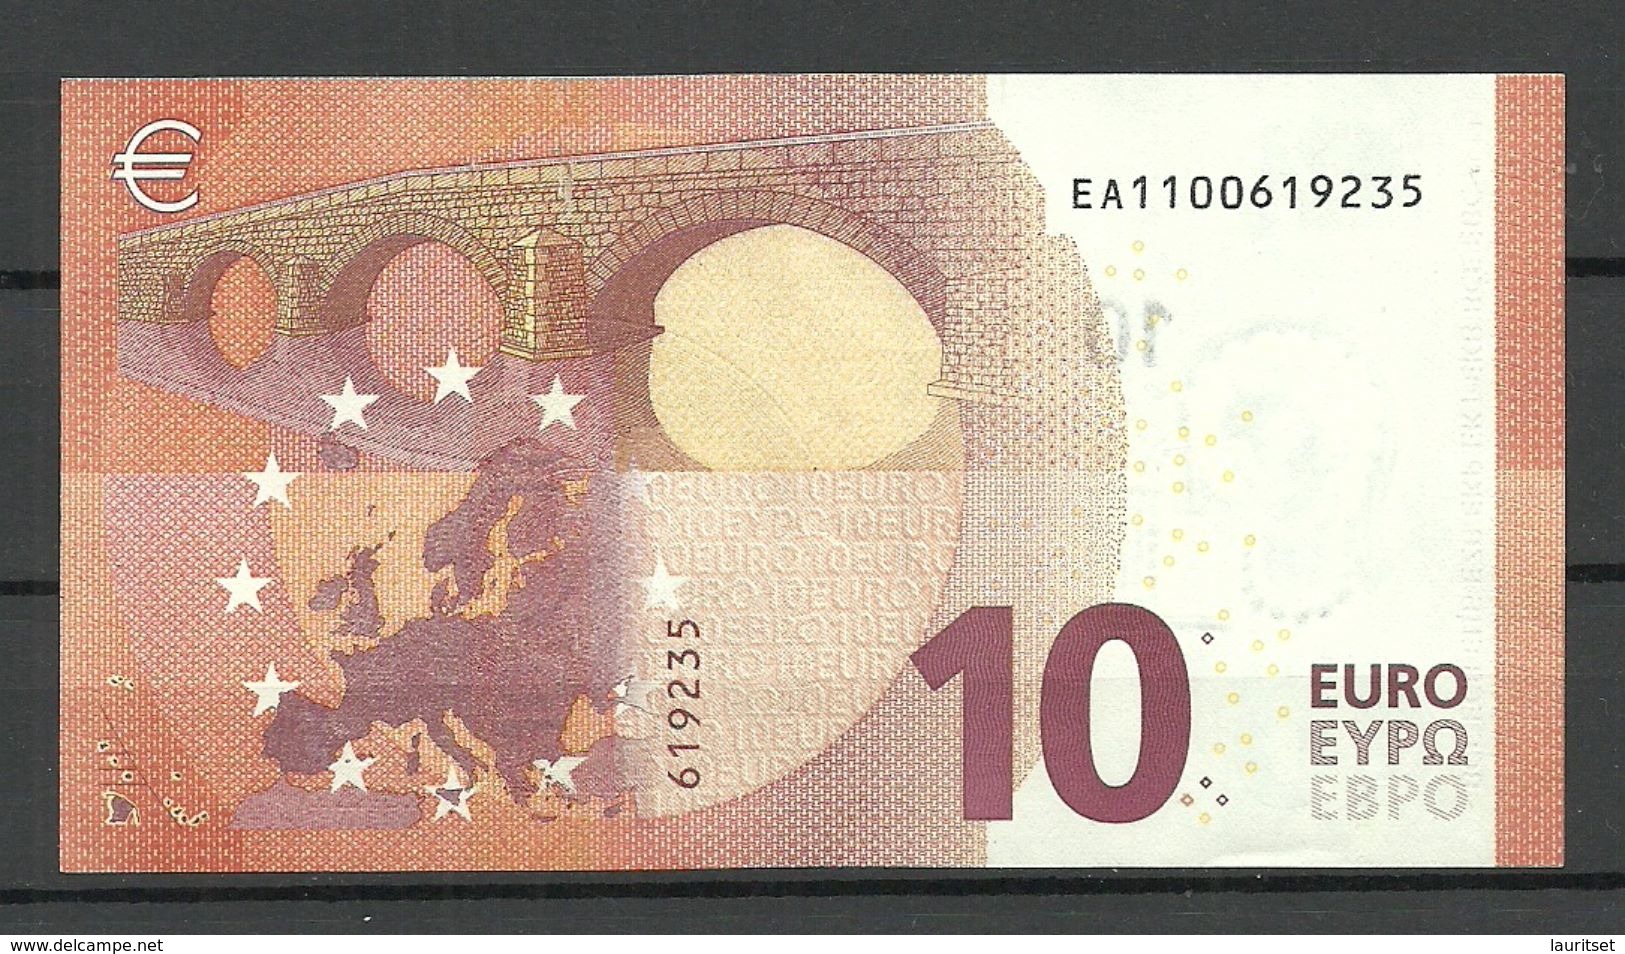 SLOVAKIA 10 EUR 2014 E-Serie Banknote - 10 Euro